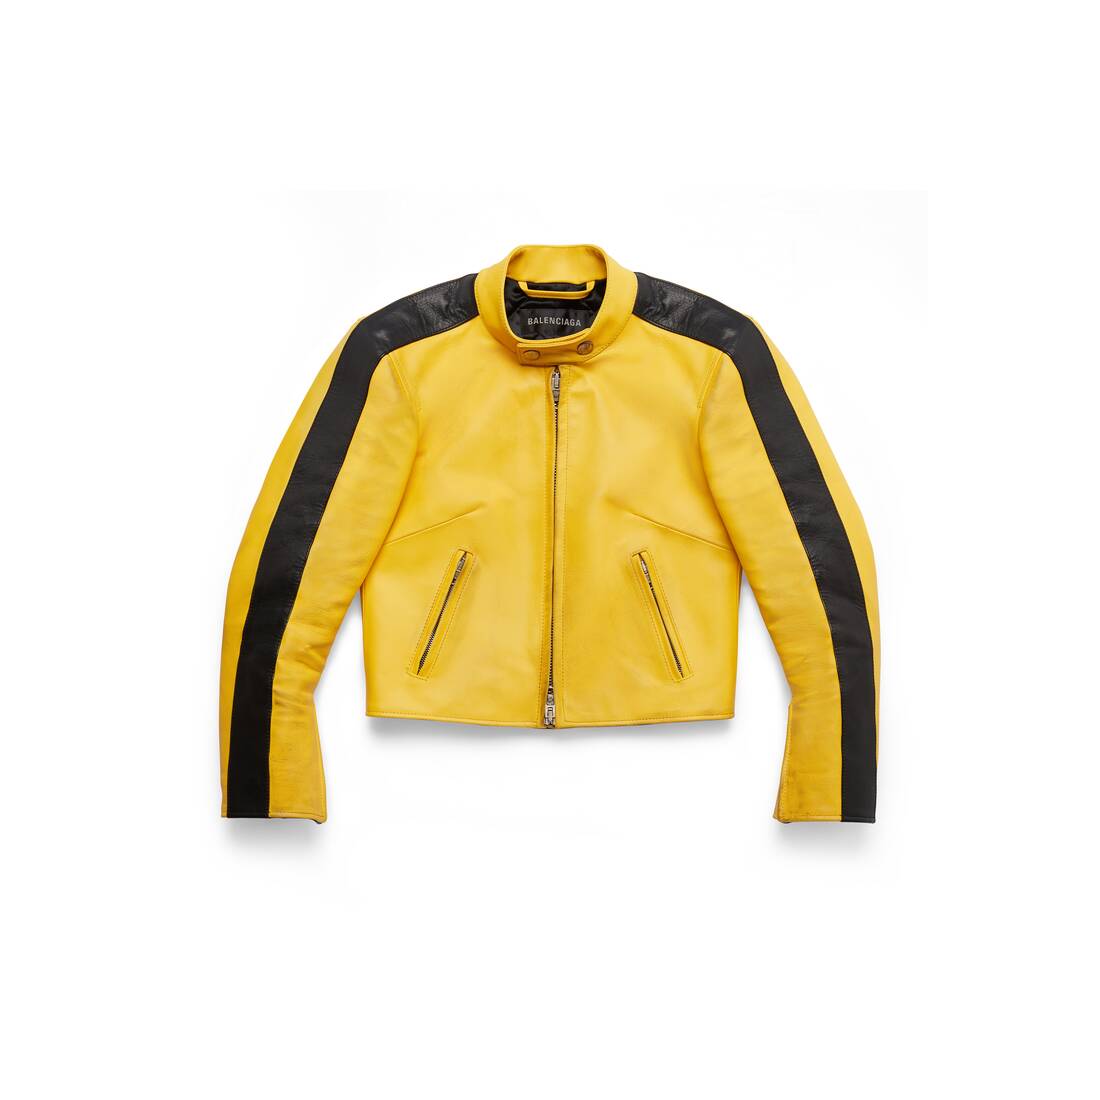 Women's Shrunk Racer Jacket in Yellow